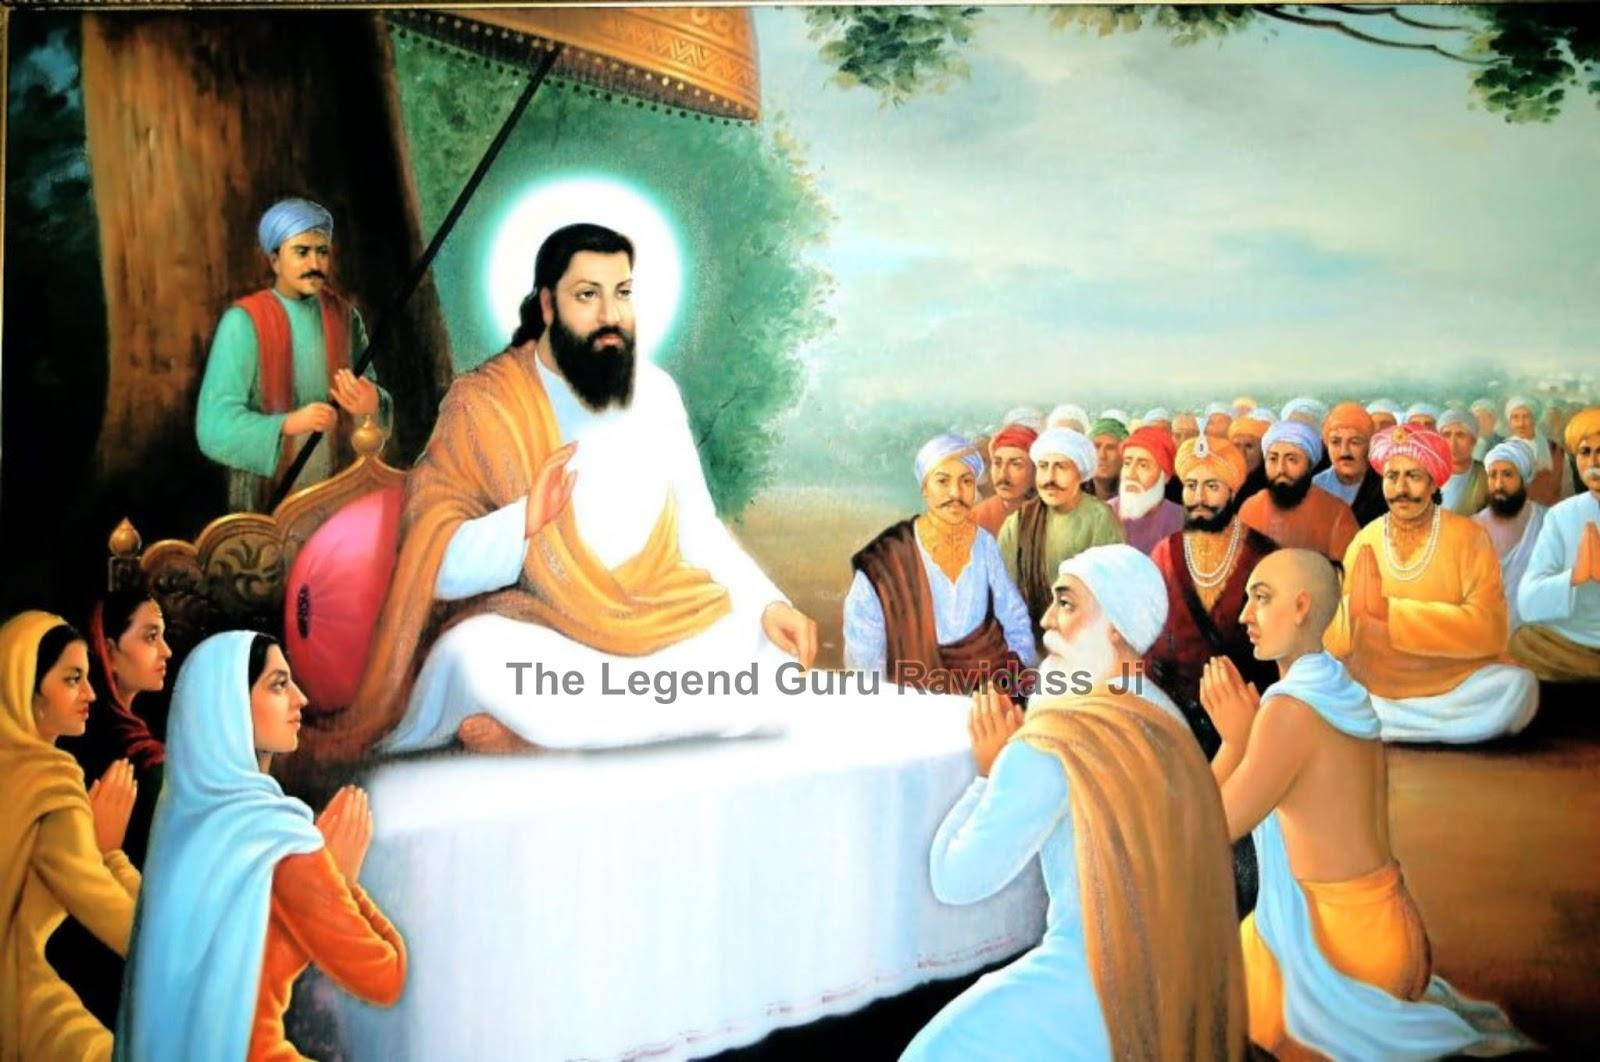 Free Guru Ravidass Wallpaper Downloads, [100+] Guru Ravidass Wallpapers for  FREE 